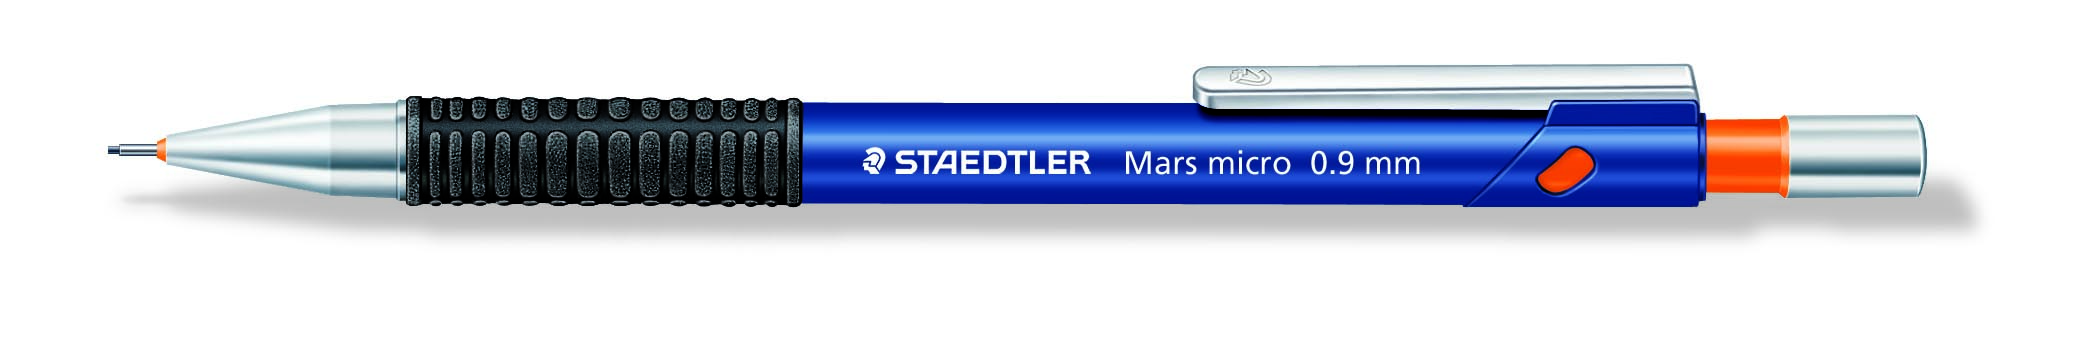 Stiftblyant Mars Micro 0,9mm bl, Staedtler 775 09,10stk